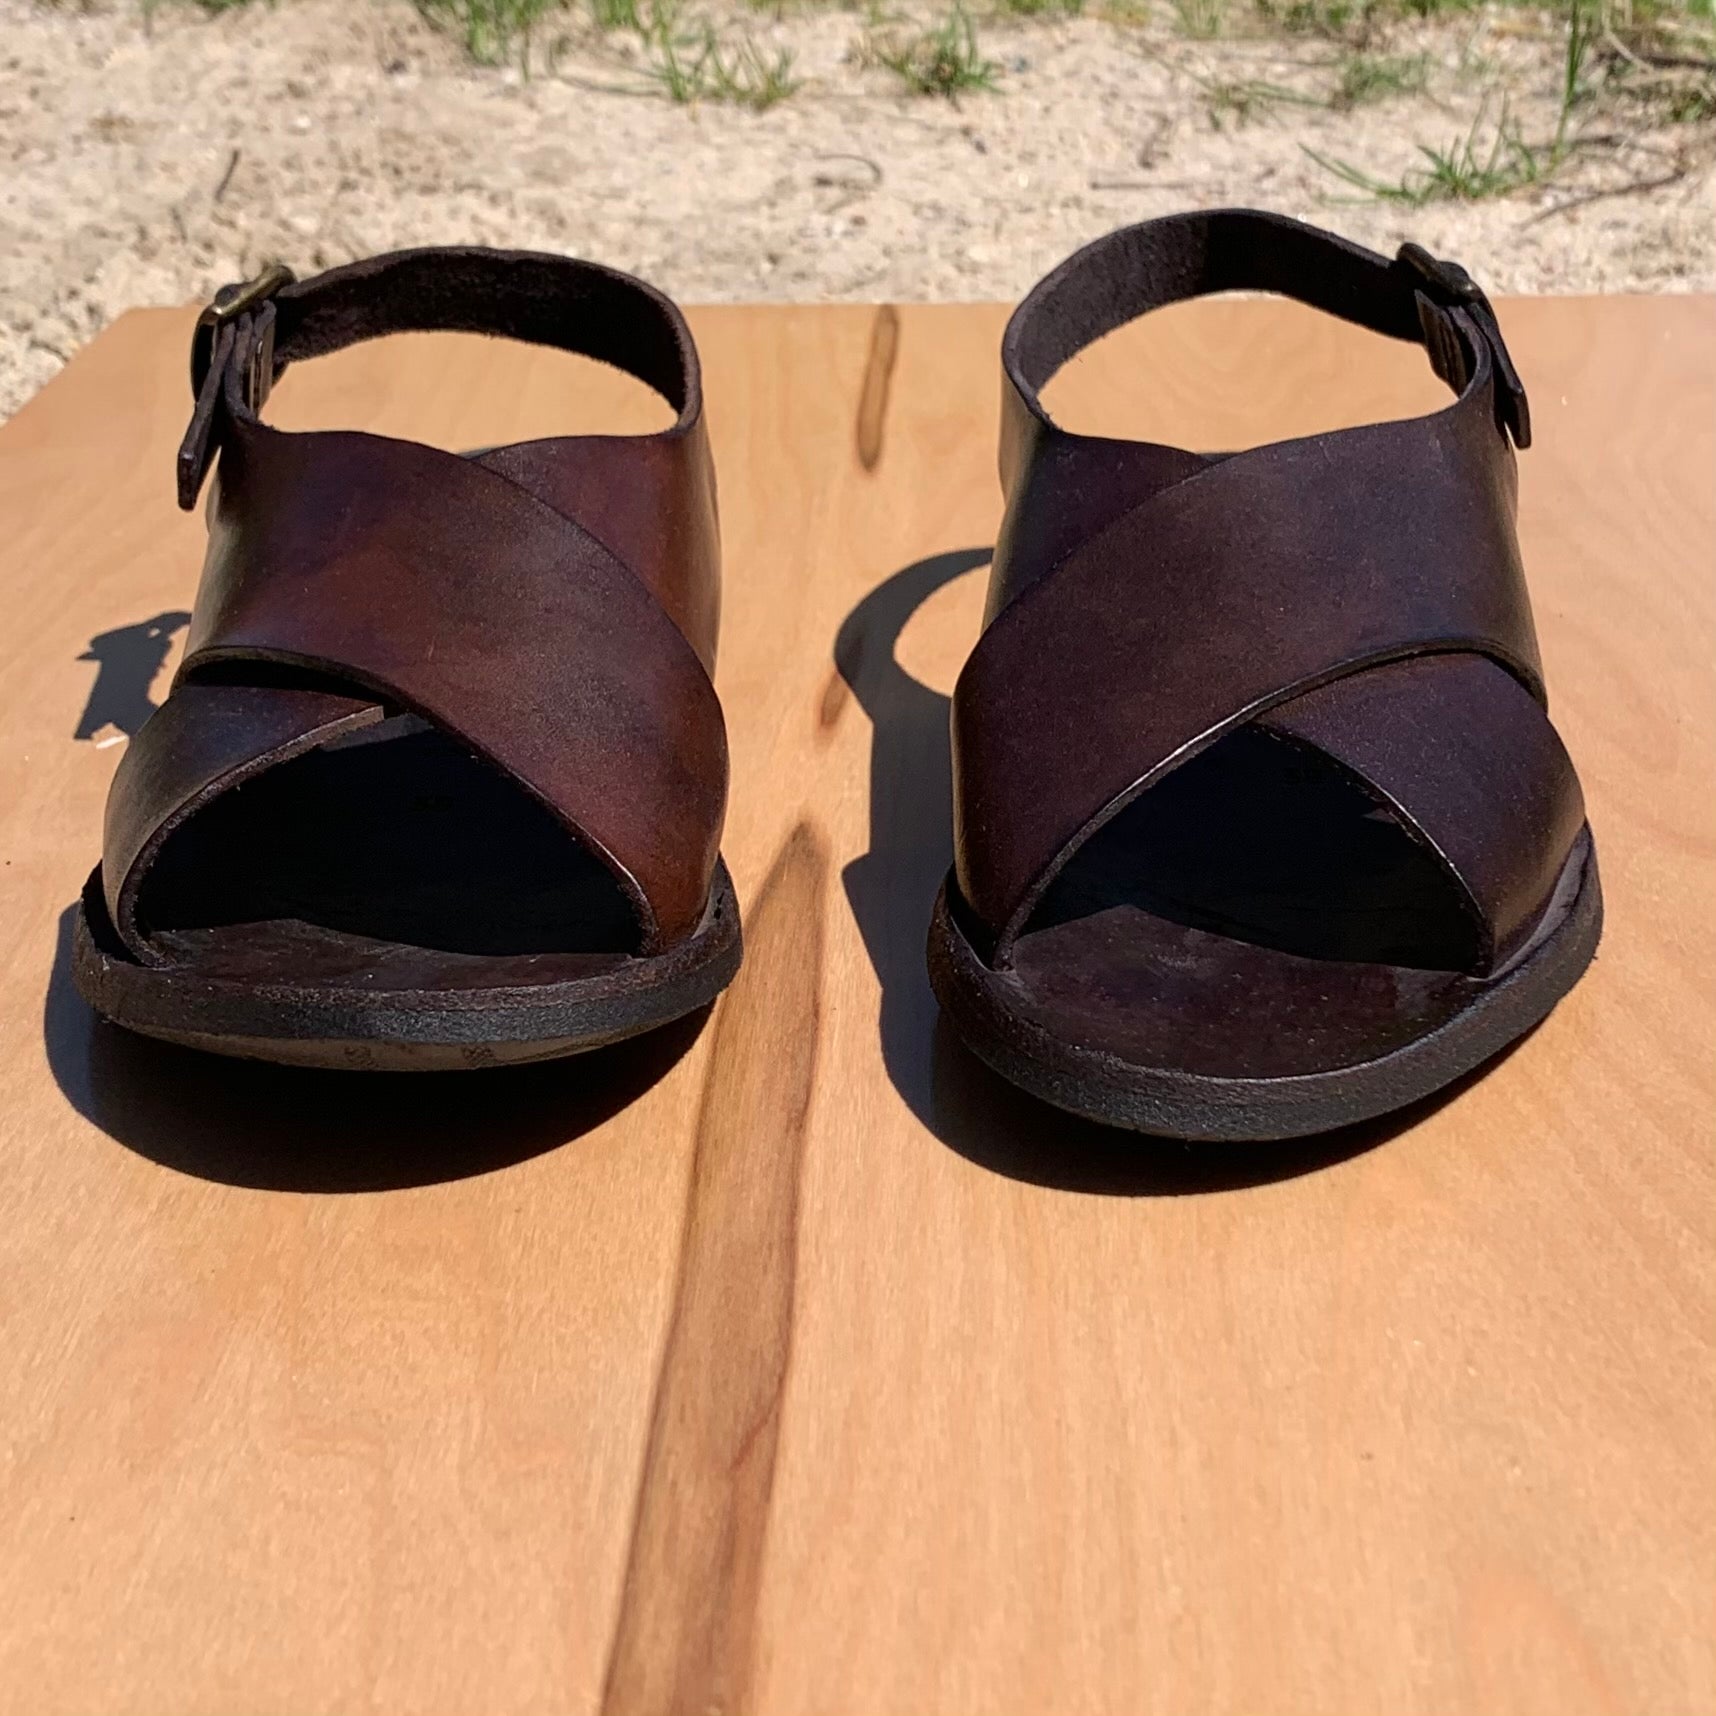 Brador Crossover Sandal size 37